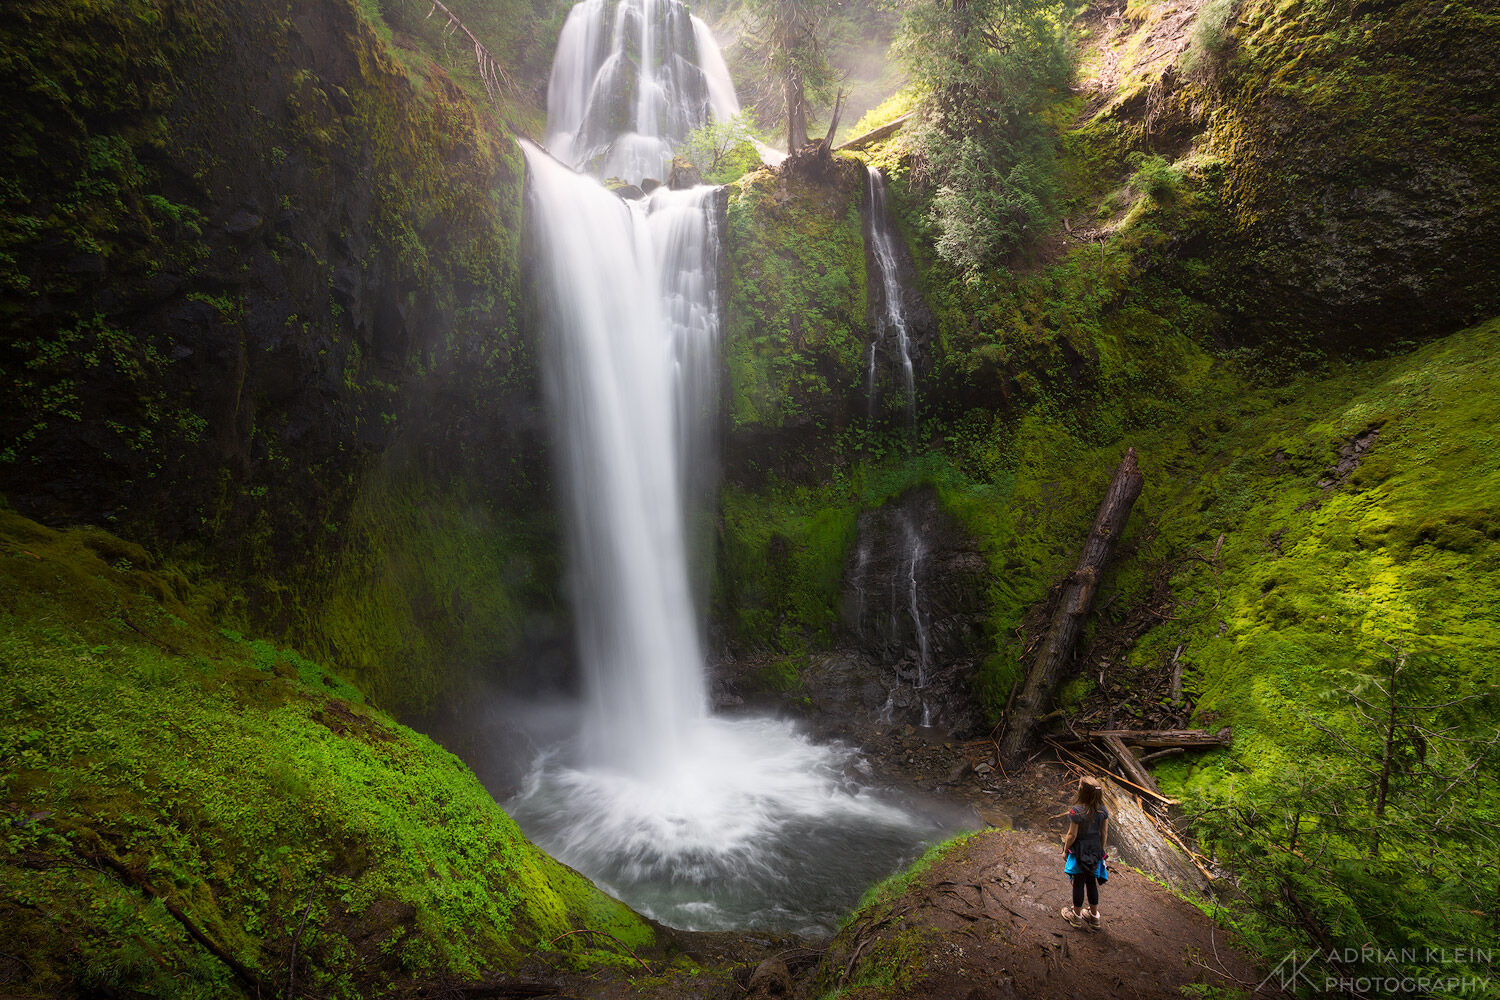 My daughter standing admiring a large waterfall in Washington.